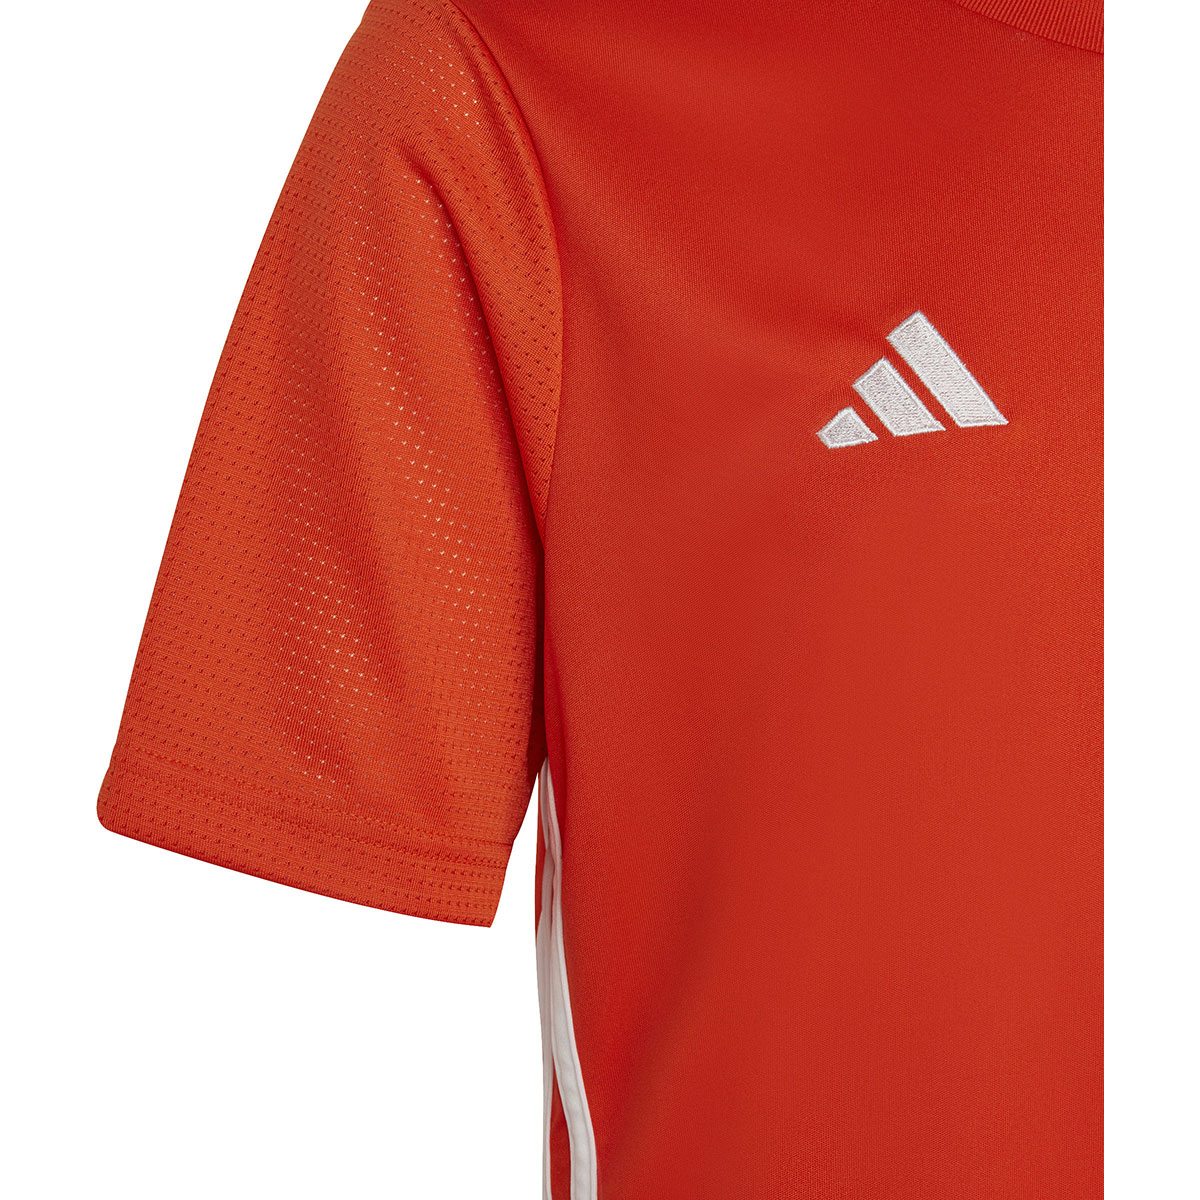 Adidas Kinder Trikot Tabela 23 orange-weiß